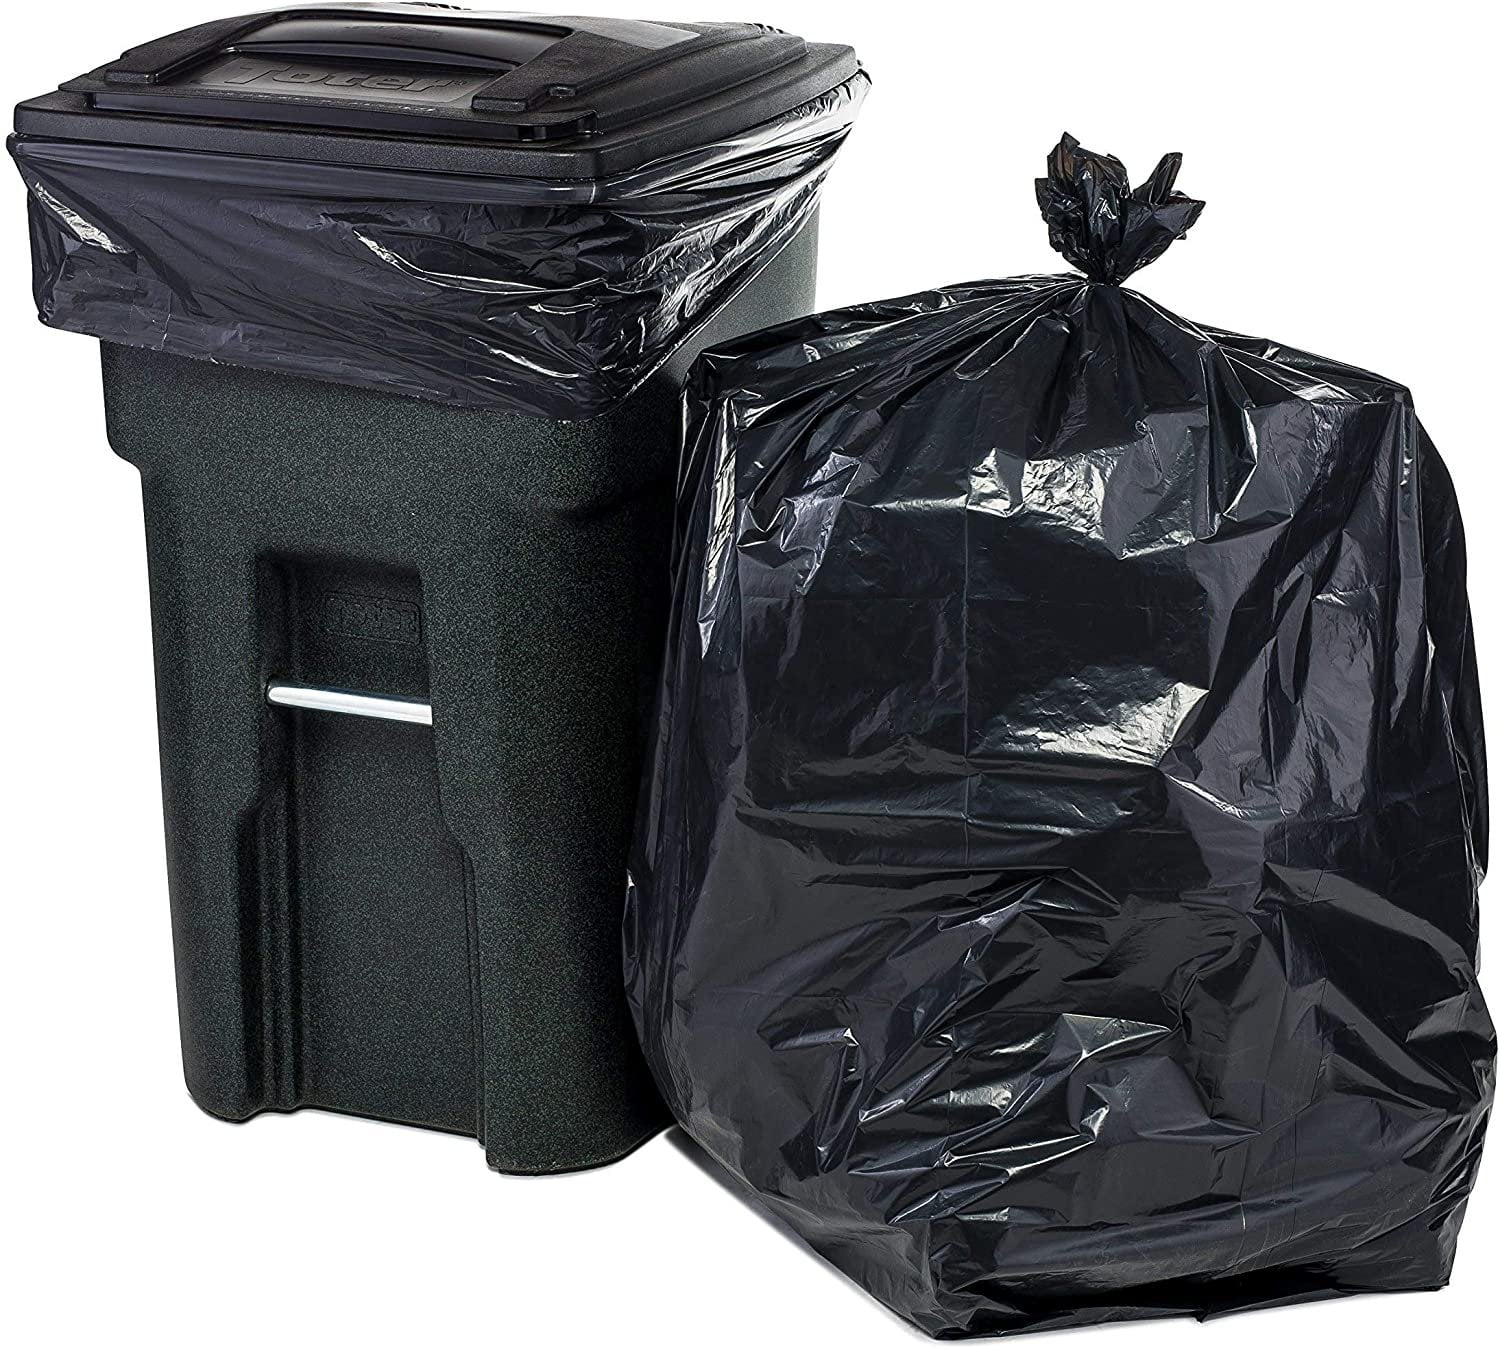 Eagrye 8 Gallon Trash Bags, 170 Counts, Black